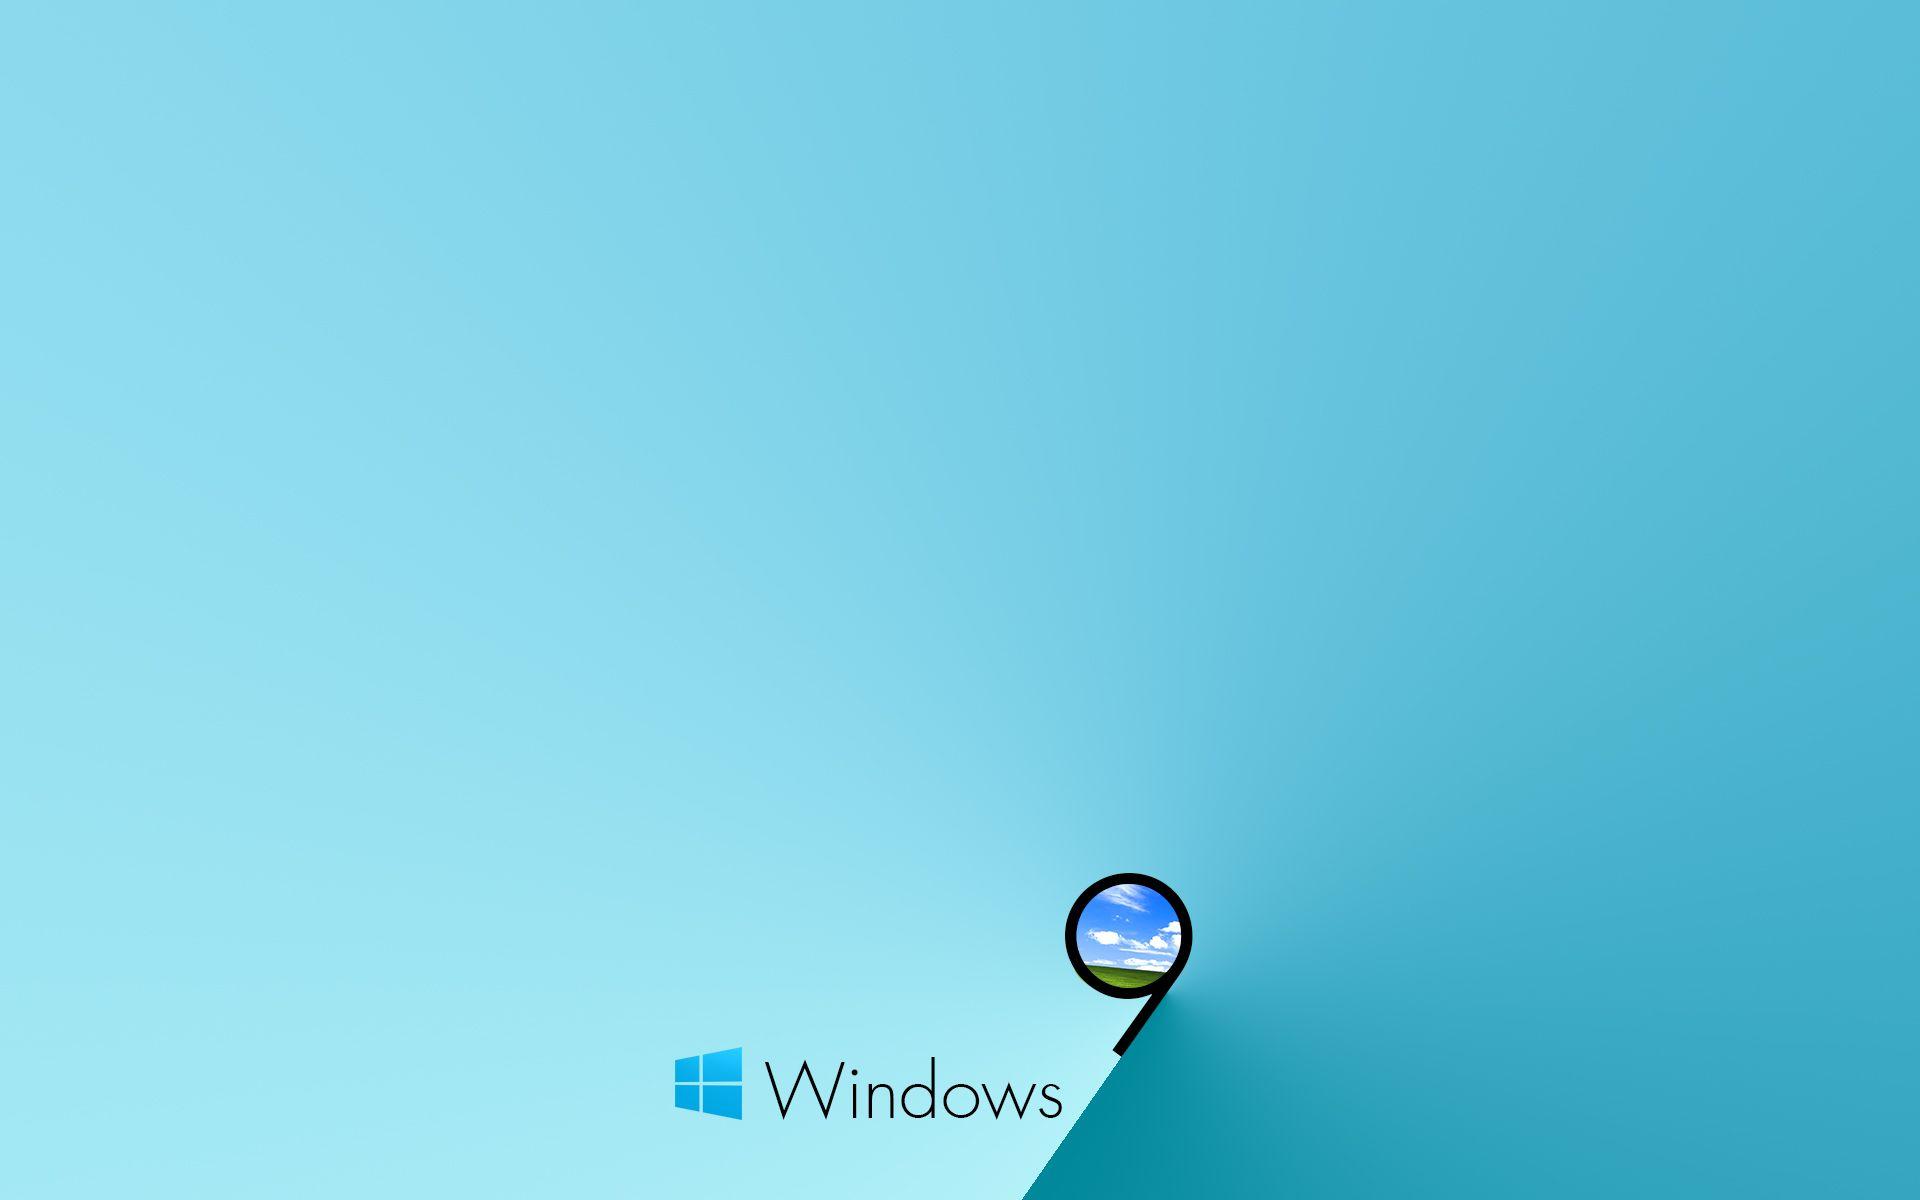 Windows 9 Wallpaper (1920×1200)